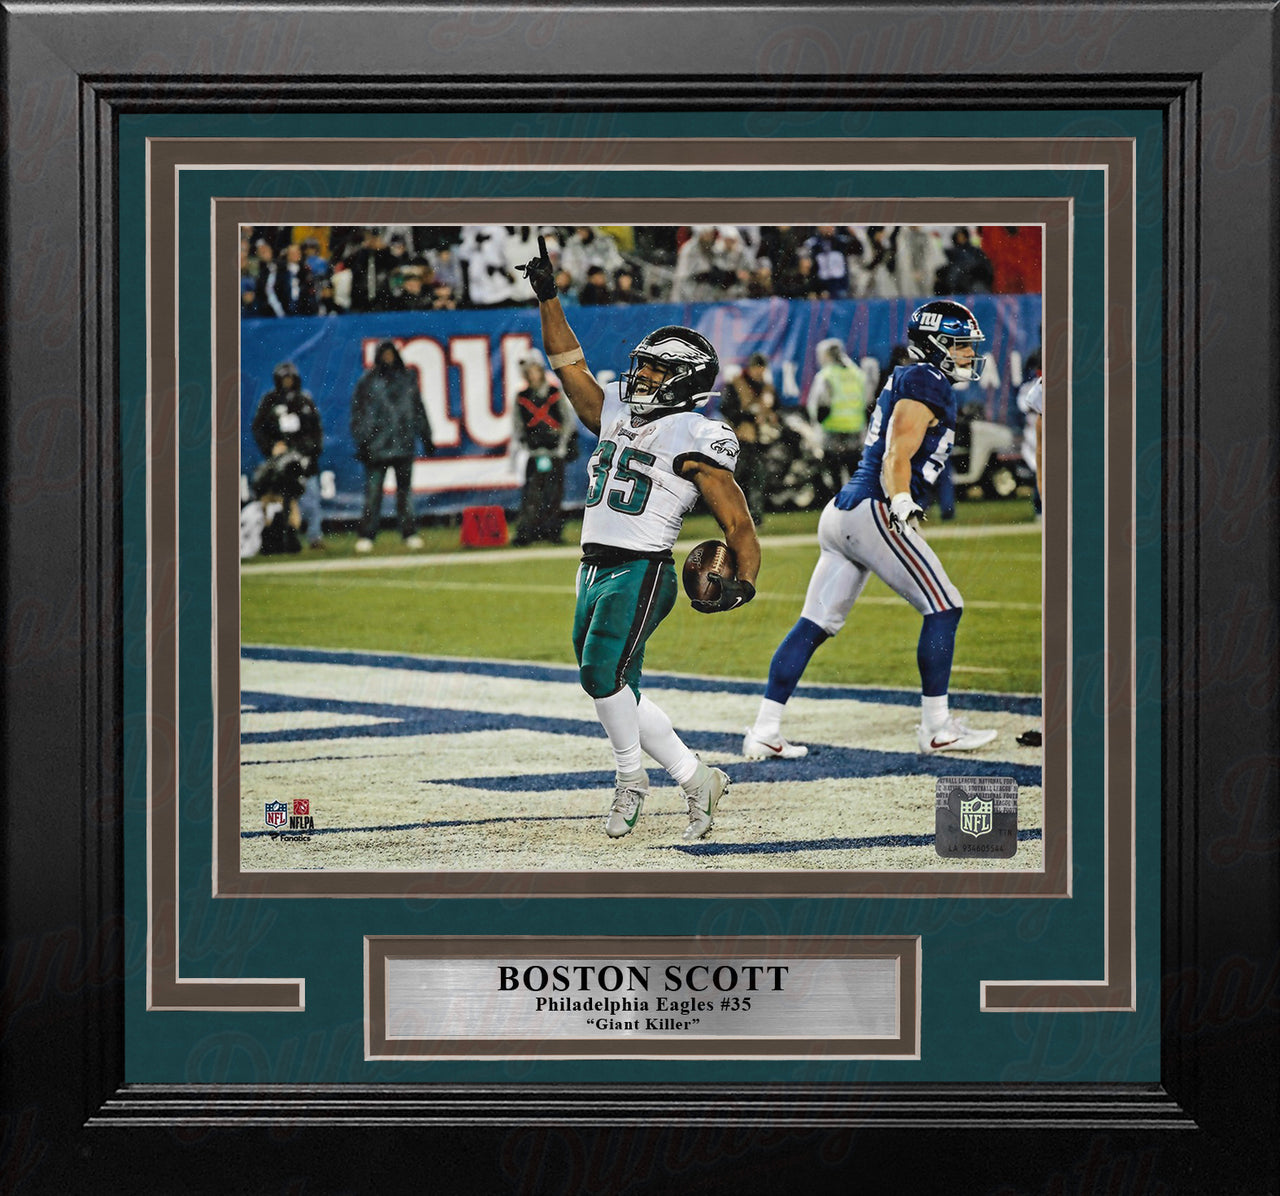 Boston Scott Touchdown Celebration v. Giants Philadelphia Eagles 8" x 10" Framed Football Photo